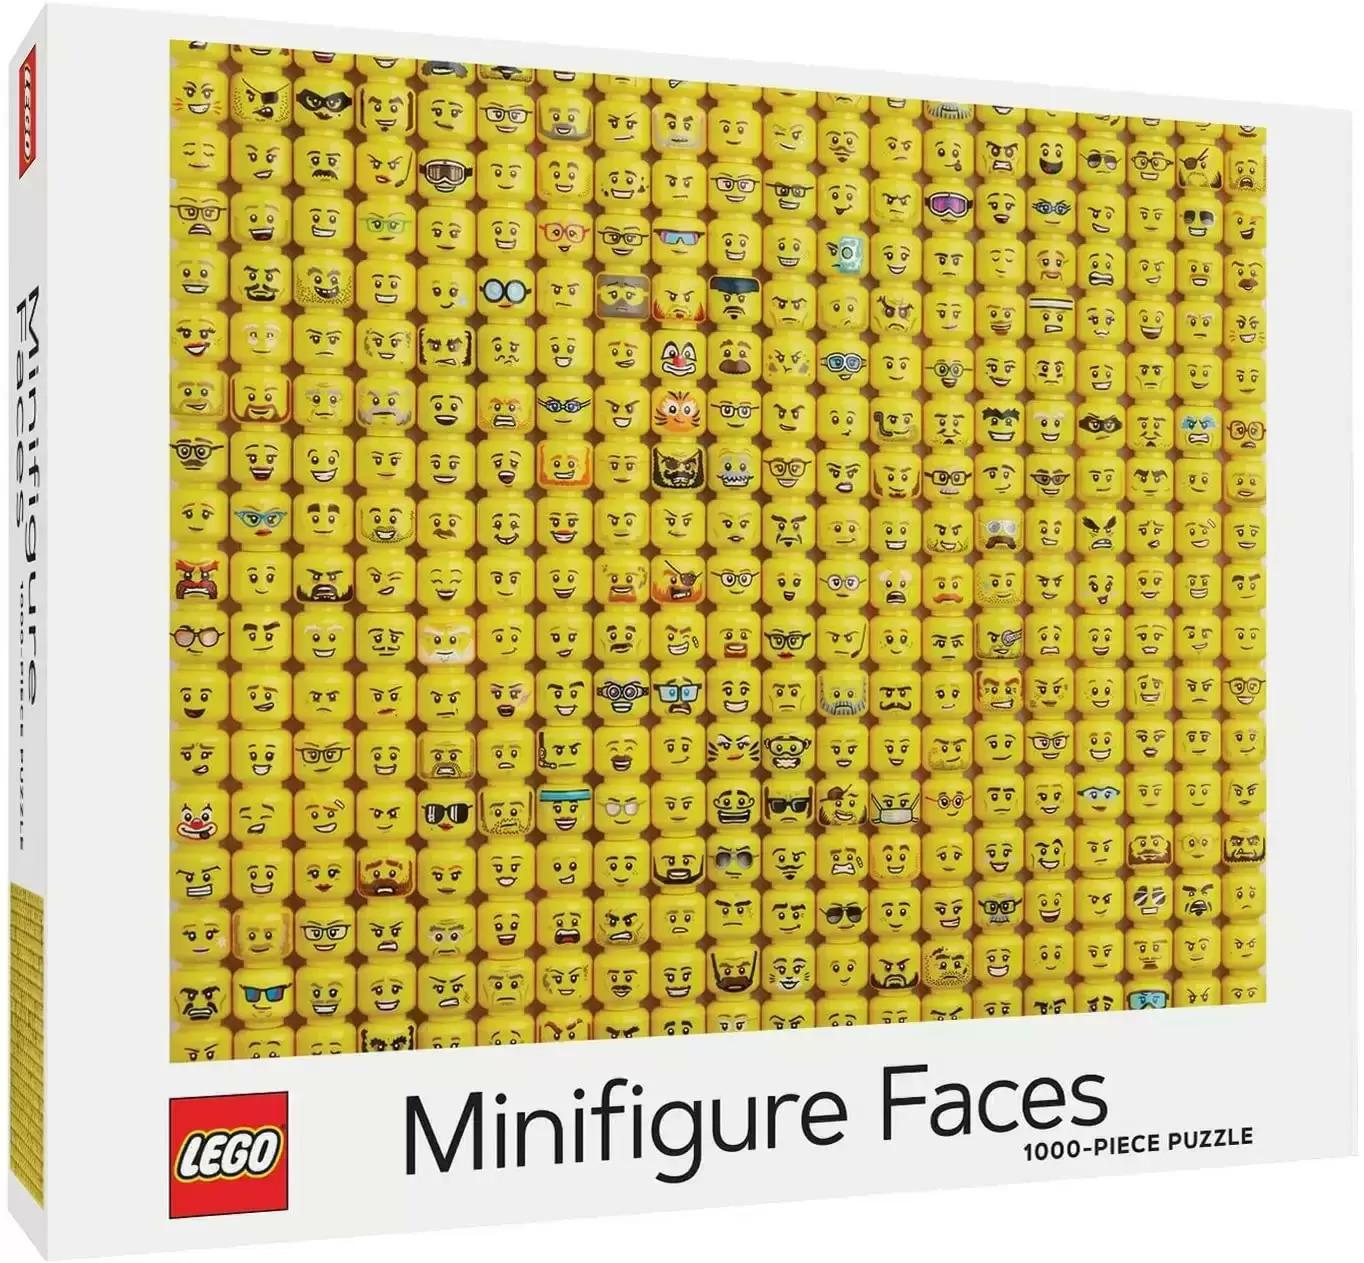 1000-Piece LEGO Minifigure Faces Jigsaw Puzzle for $8.49